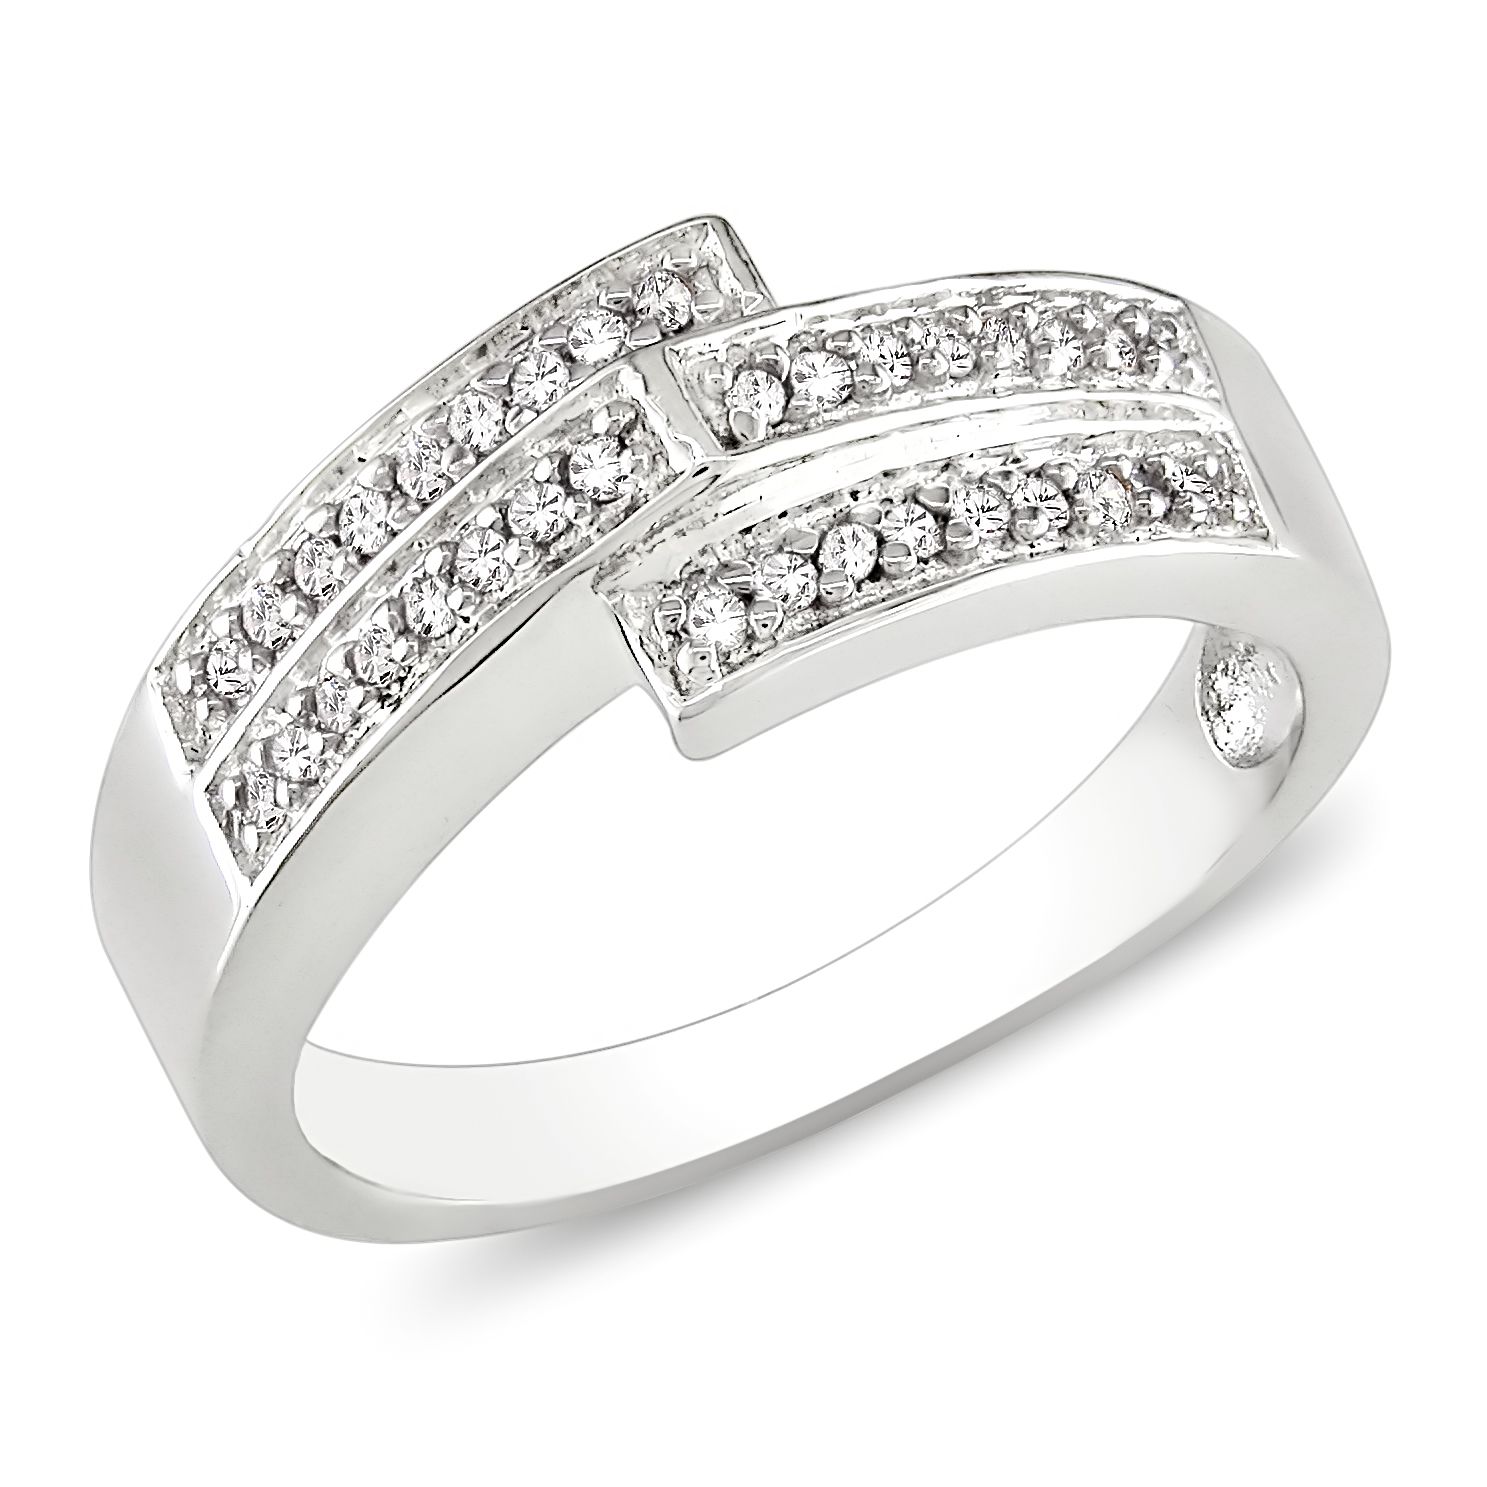 1/6 CTTW Diamond Fashion Ring Set in 10K White Gold (GH I2;I3)